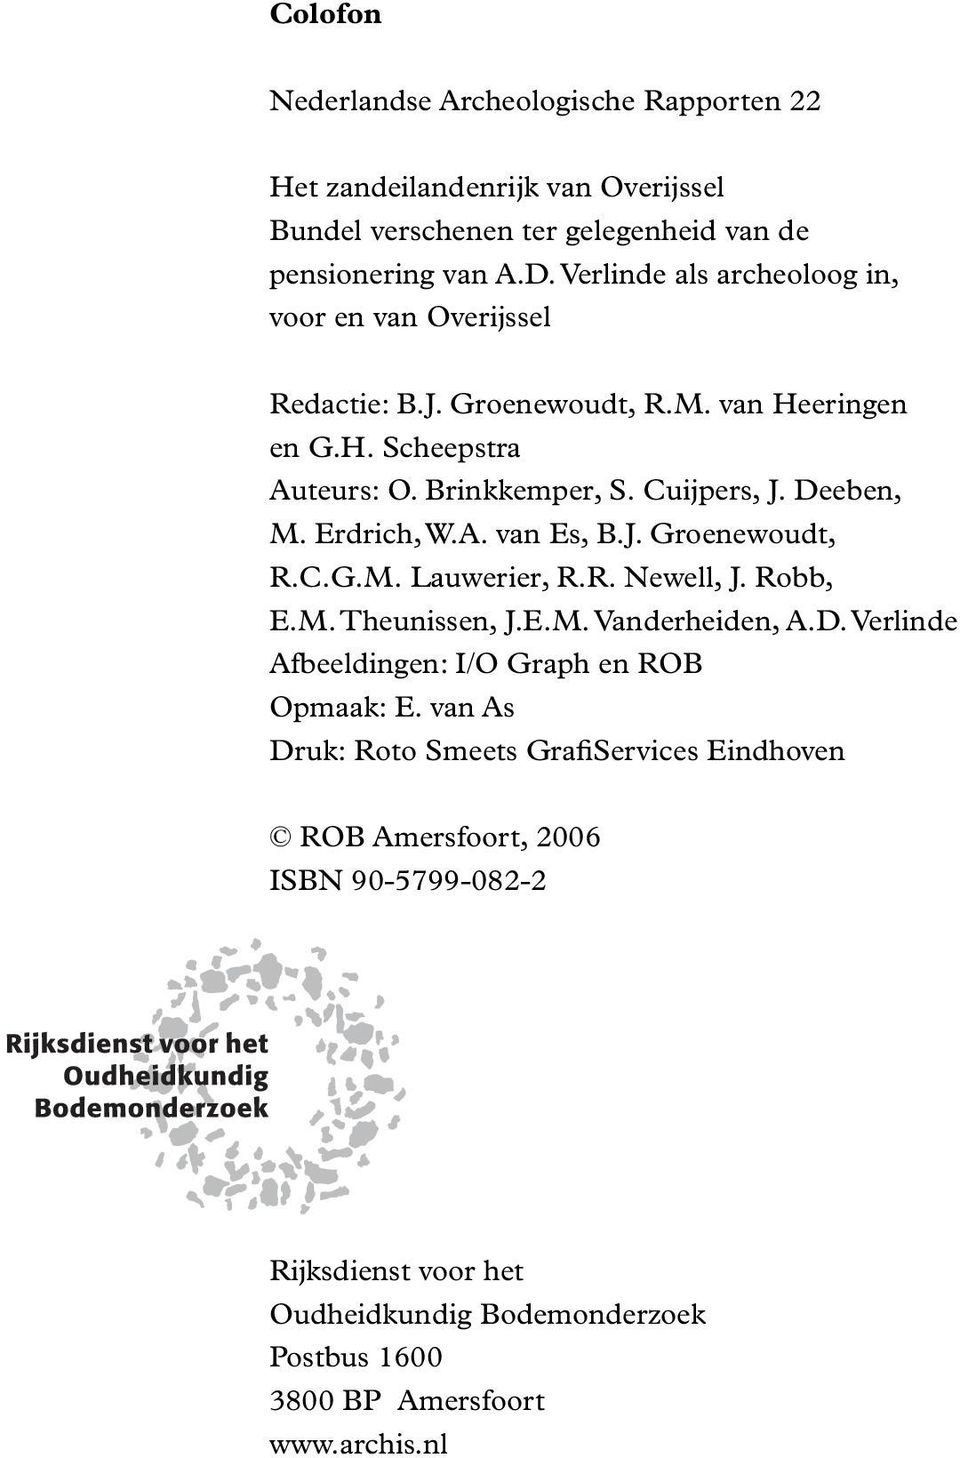 Erdrich,W.A. van Es, B.J. Groenewoudt, R.C.G.M. Lauwerier, R.R. Newell, J. Robb, E.M. Theunissen, J.E.M. Vanderheiden, A.D.